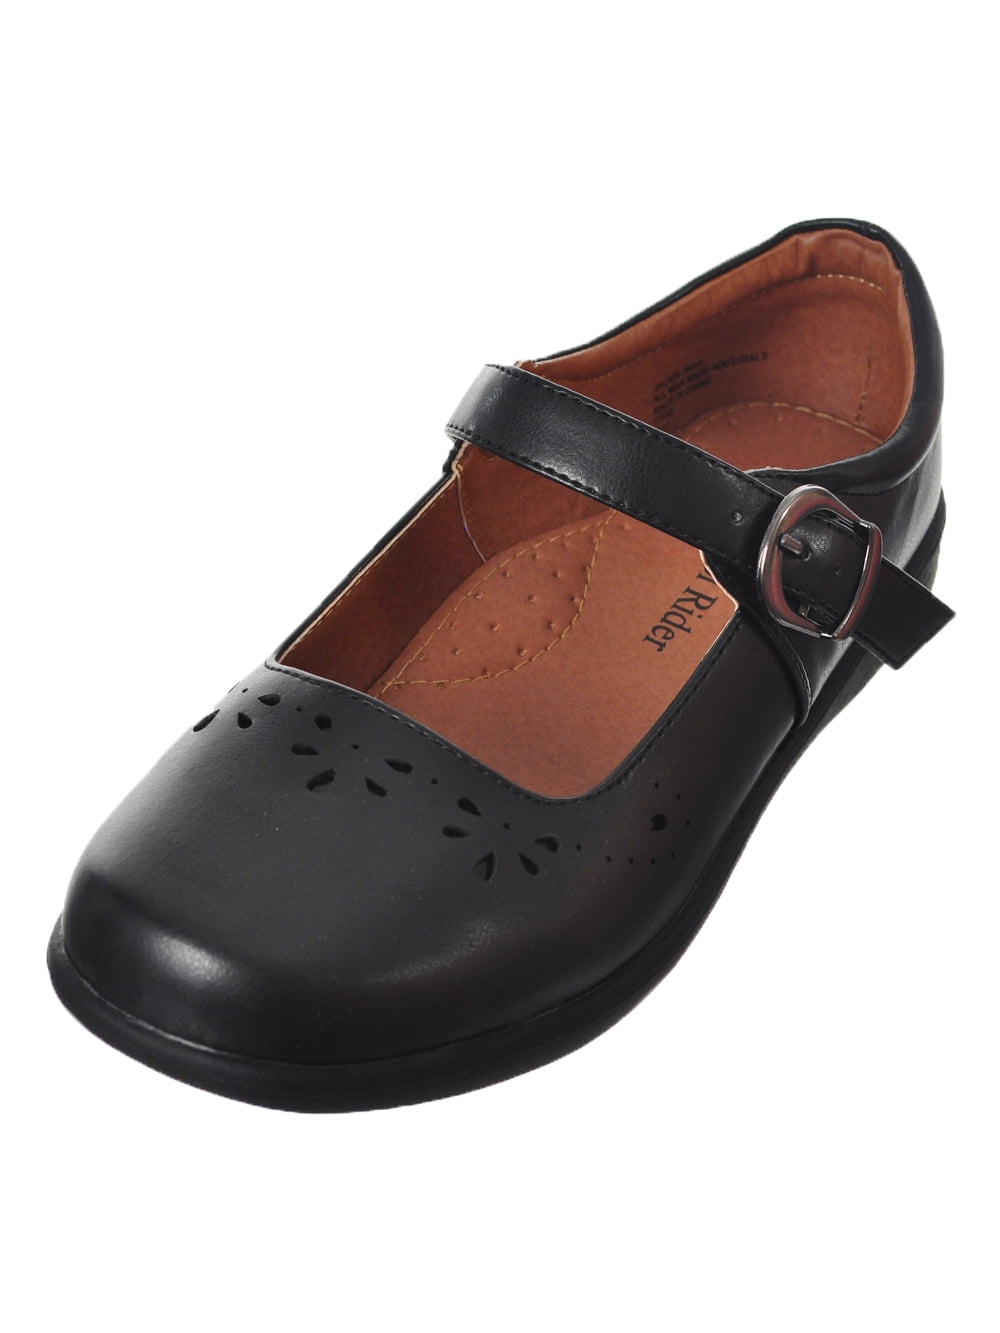 School Rider Girls' Mary Jane Shoes (Sizes 5 - 10) - Walmart.com